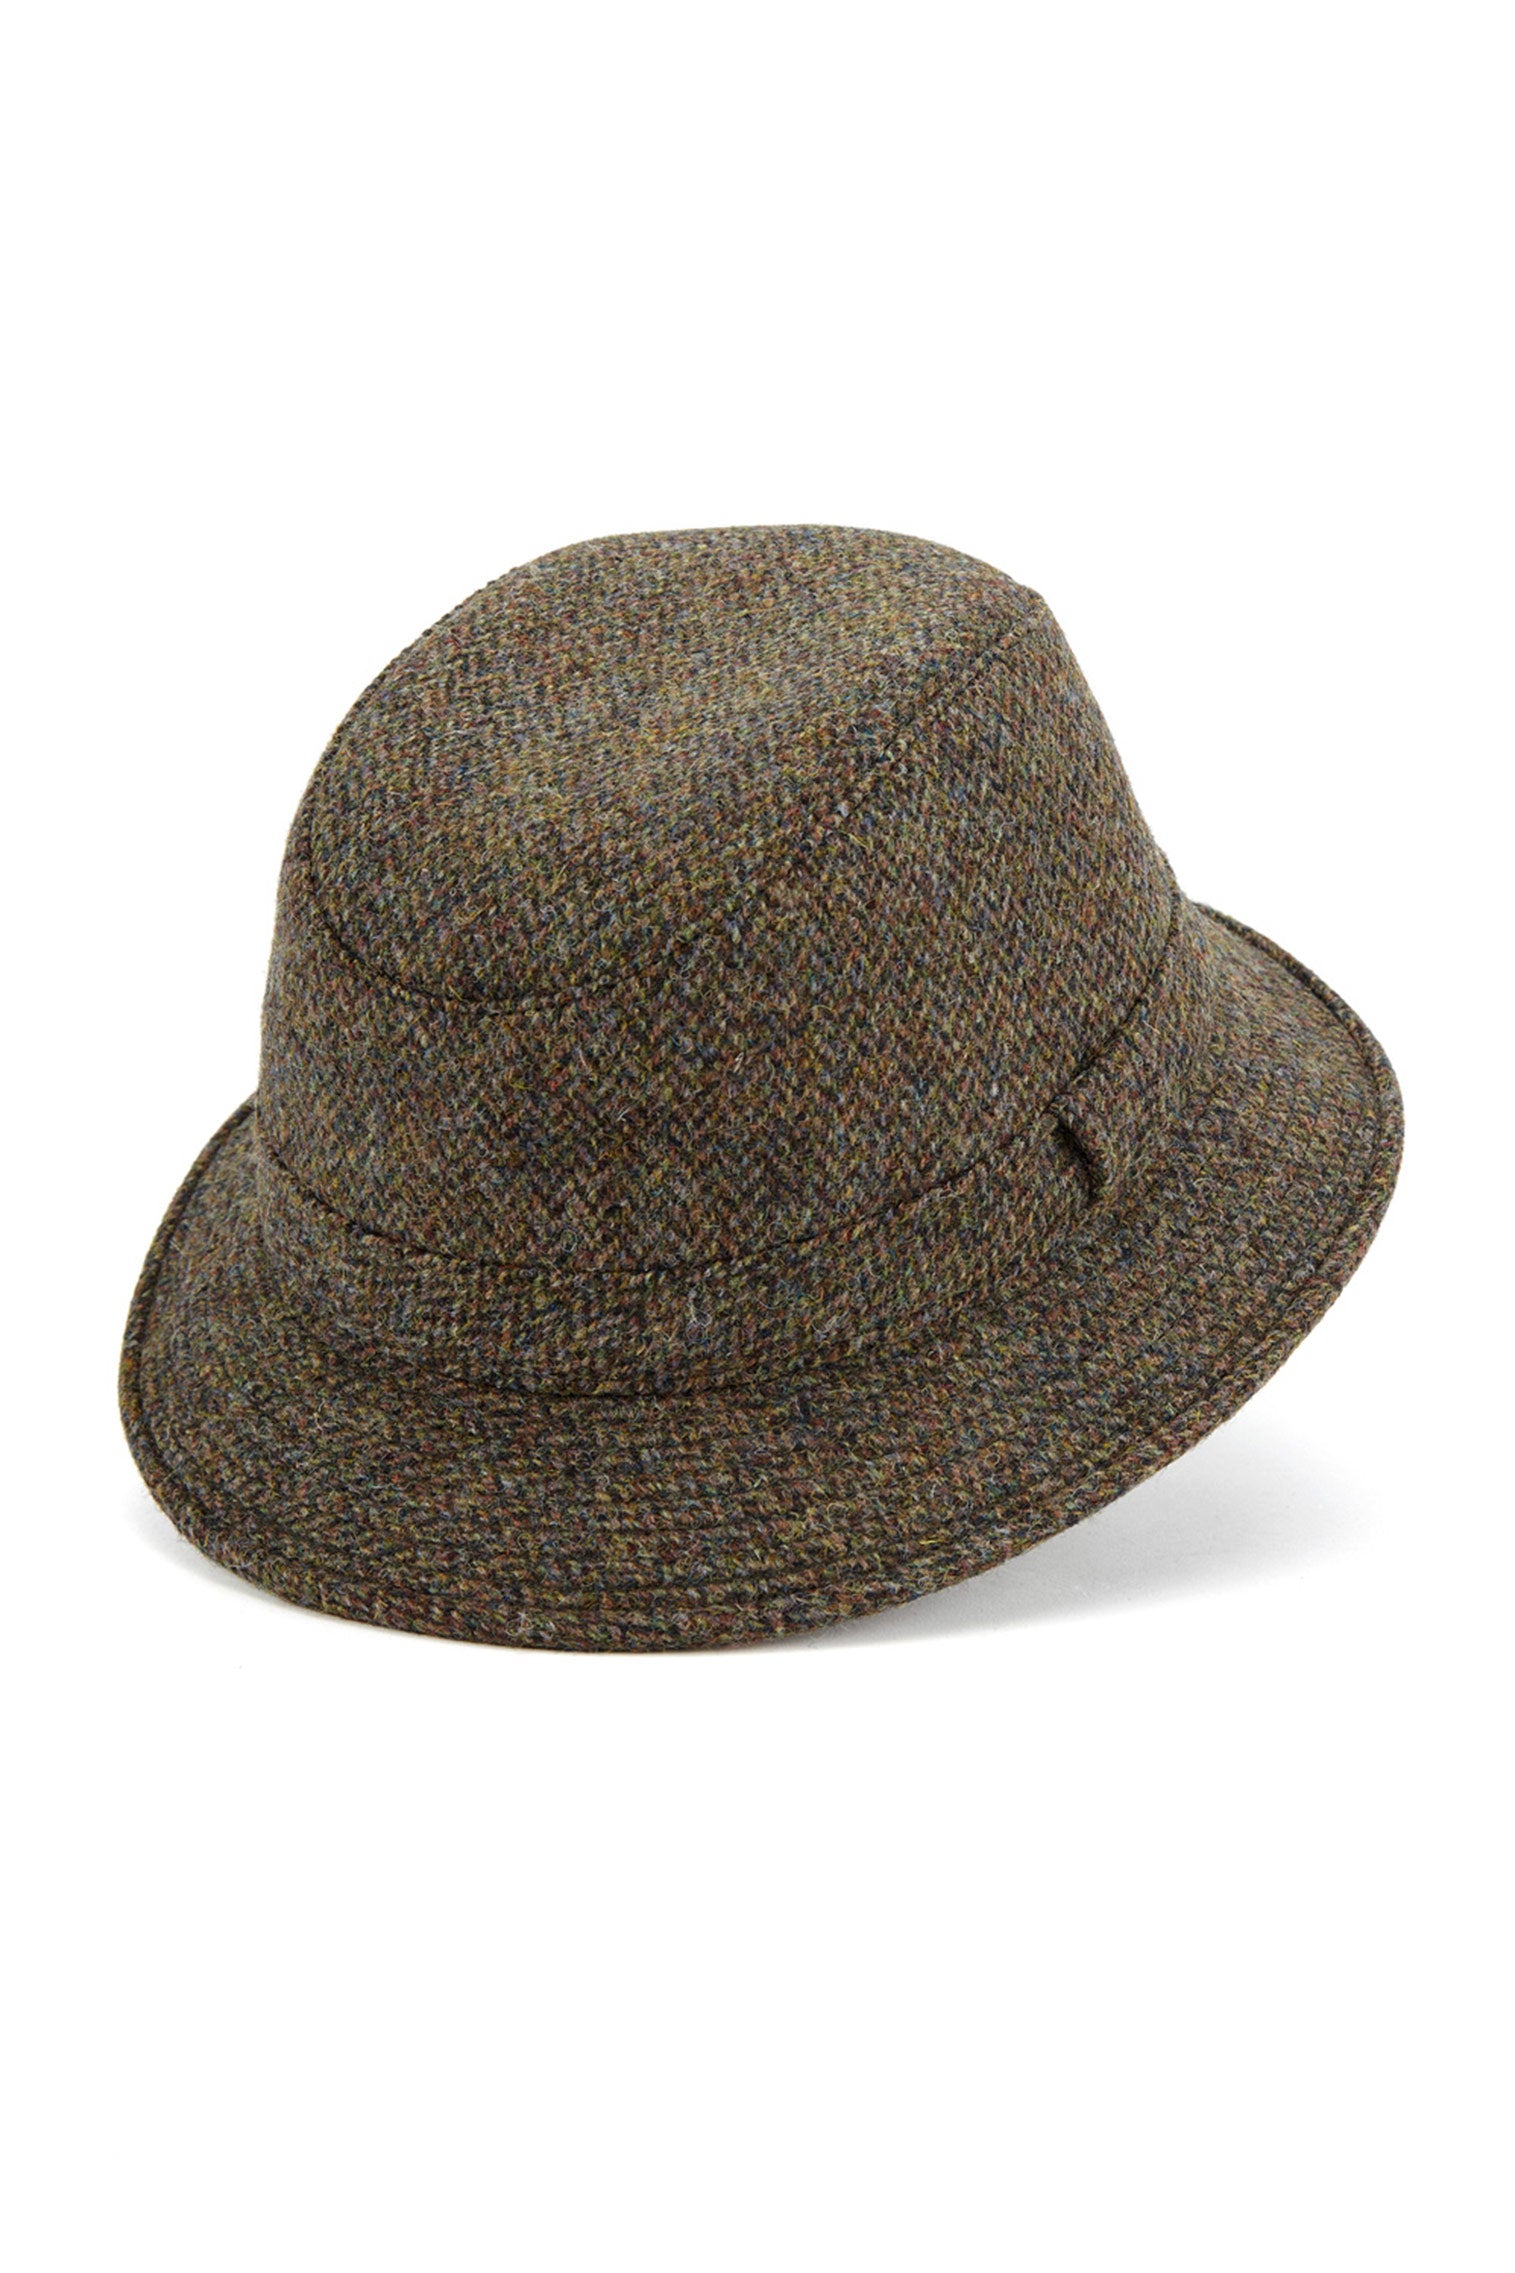 Grouse Tweed Rollable Hat - Men's Hats - Lock & Co. Hatters London UK